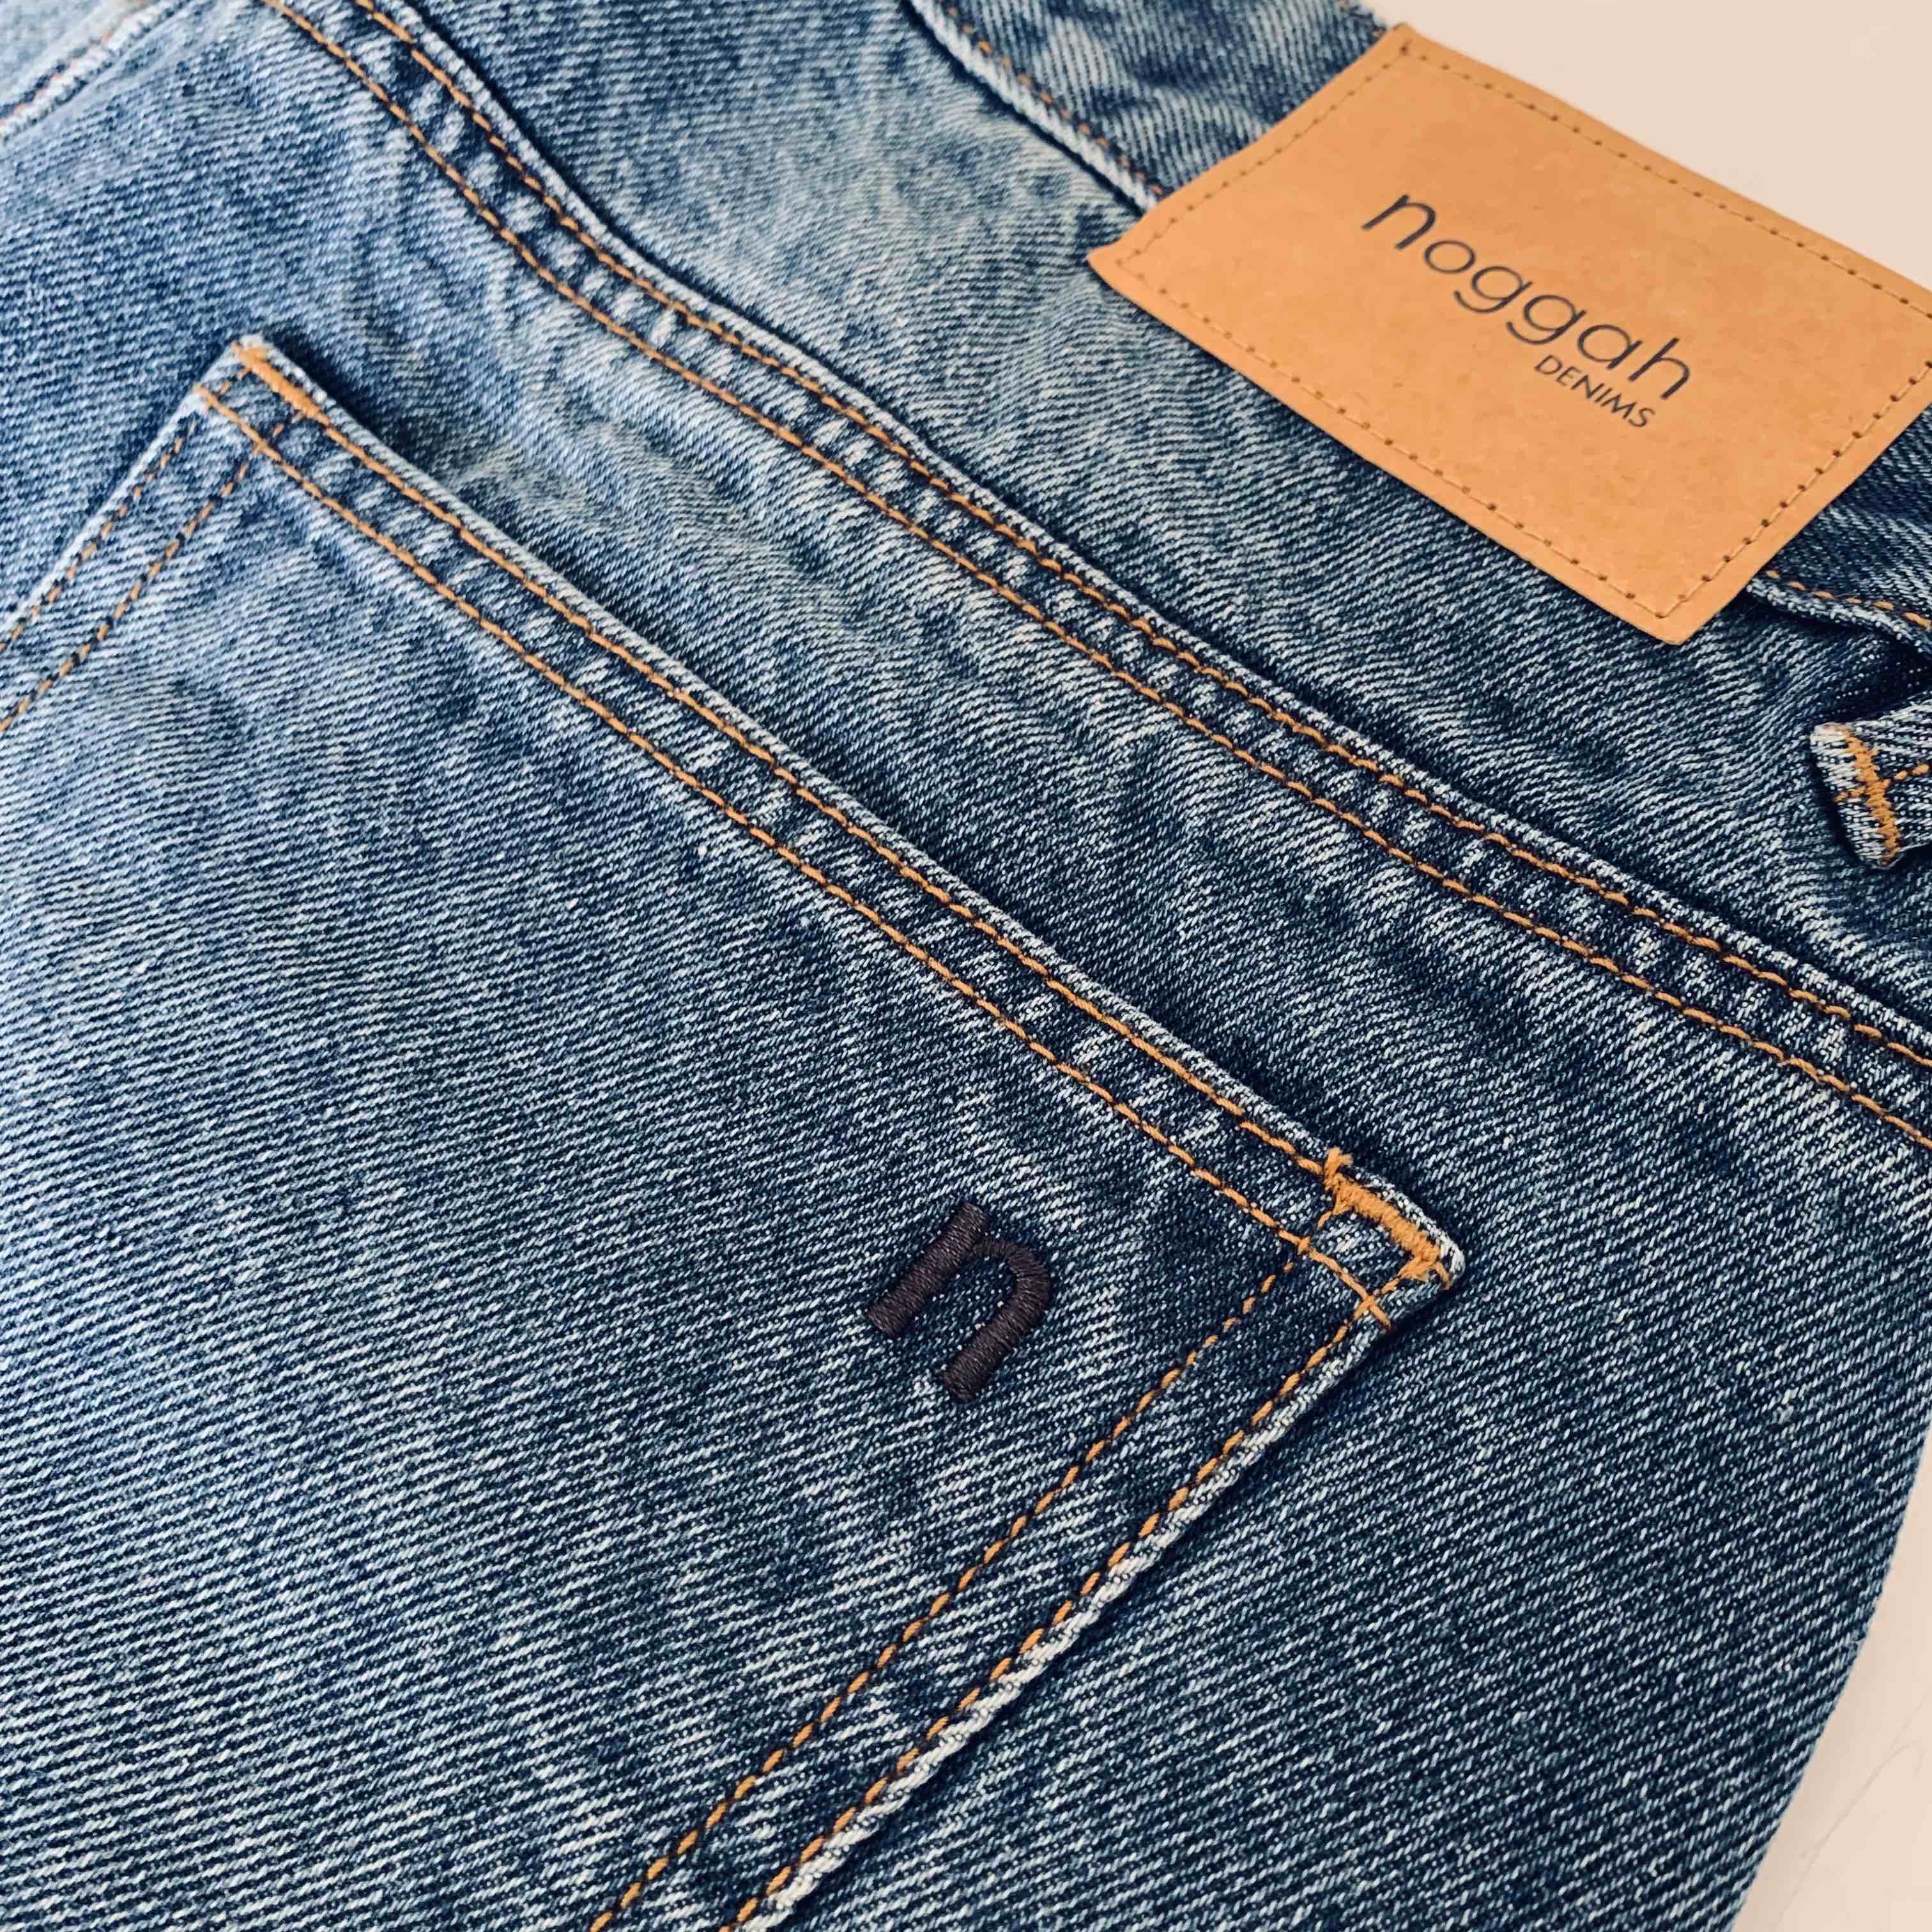 Denim Overalls for Women Sale Floral Embroidered Jeans Online